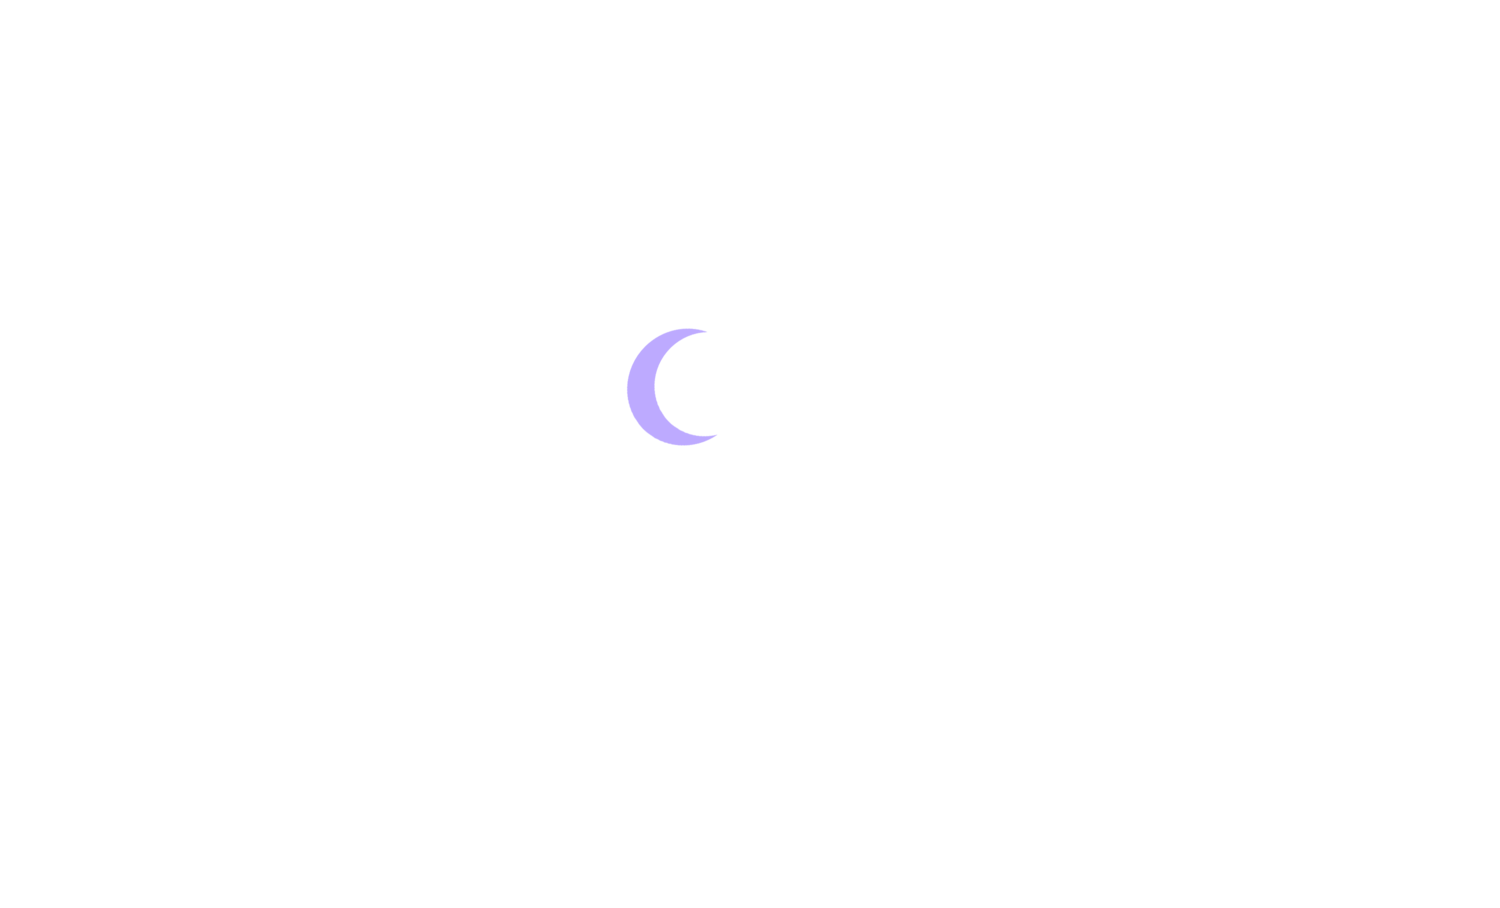 arcana management